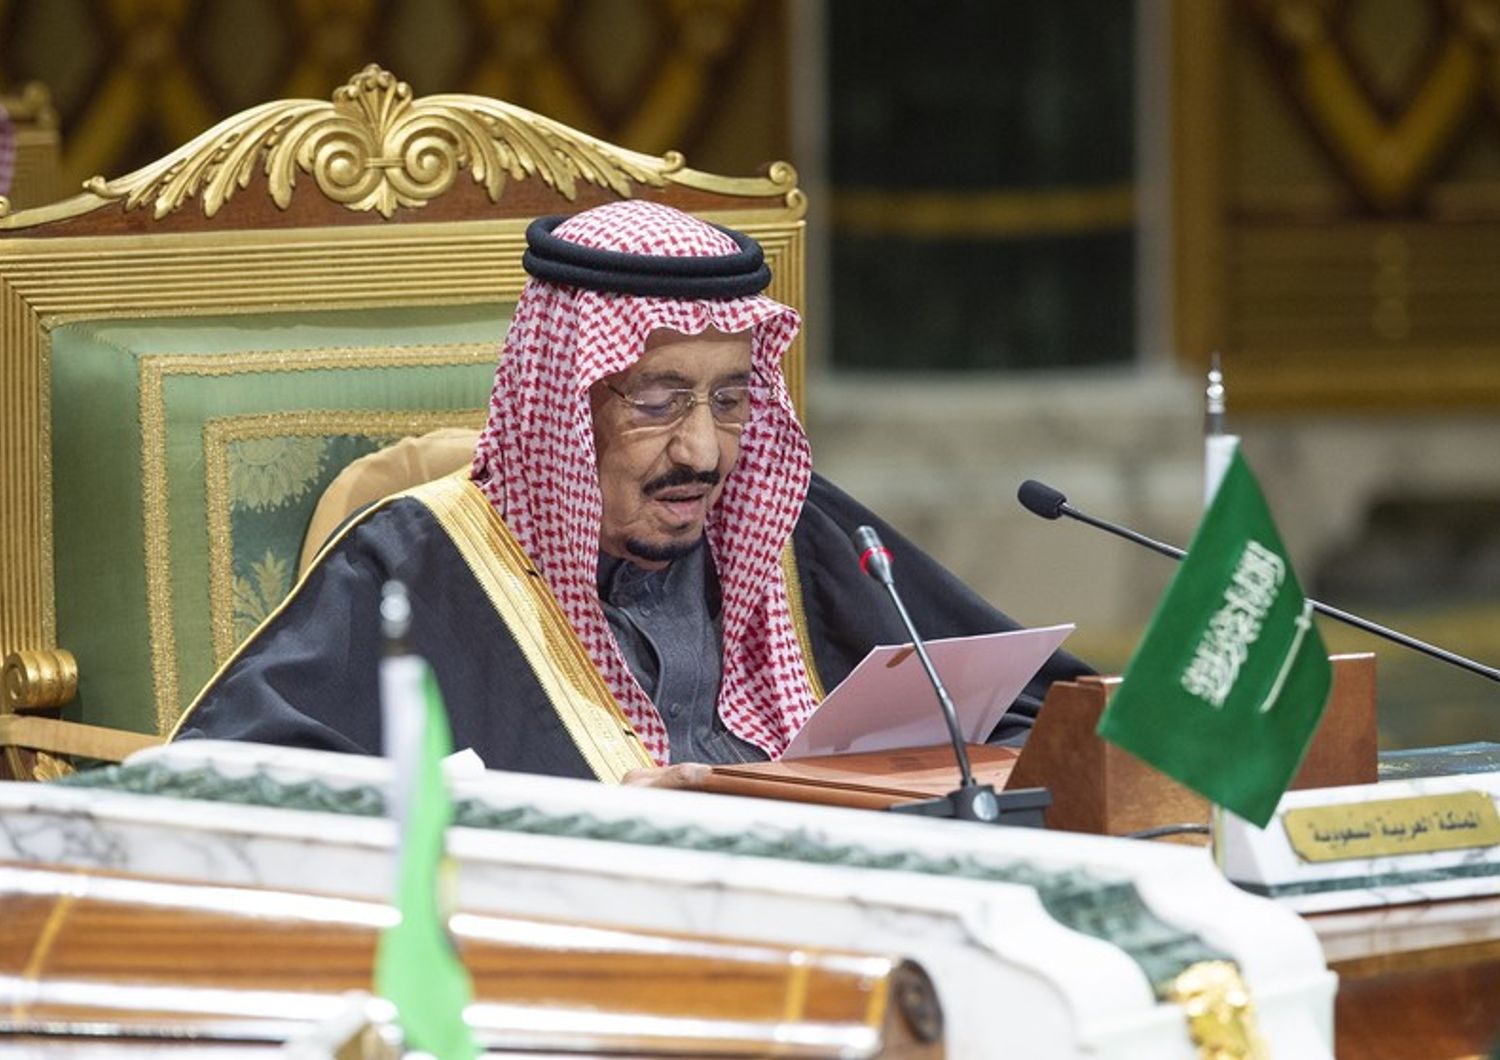 Il re dell'Arabia Saudita Salman bin Abdulaziz